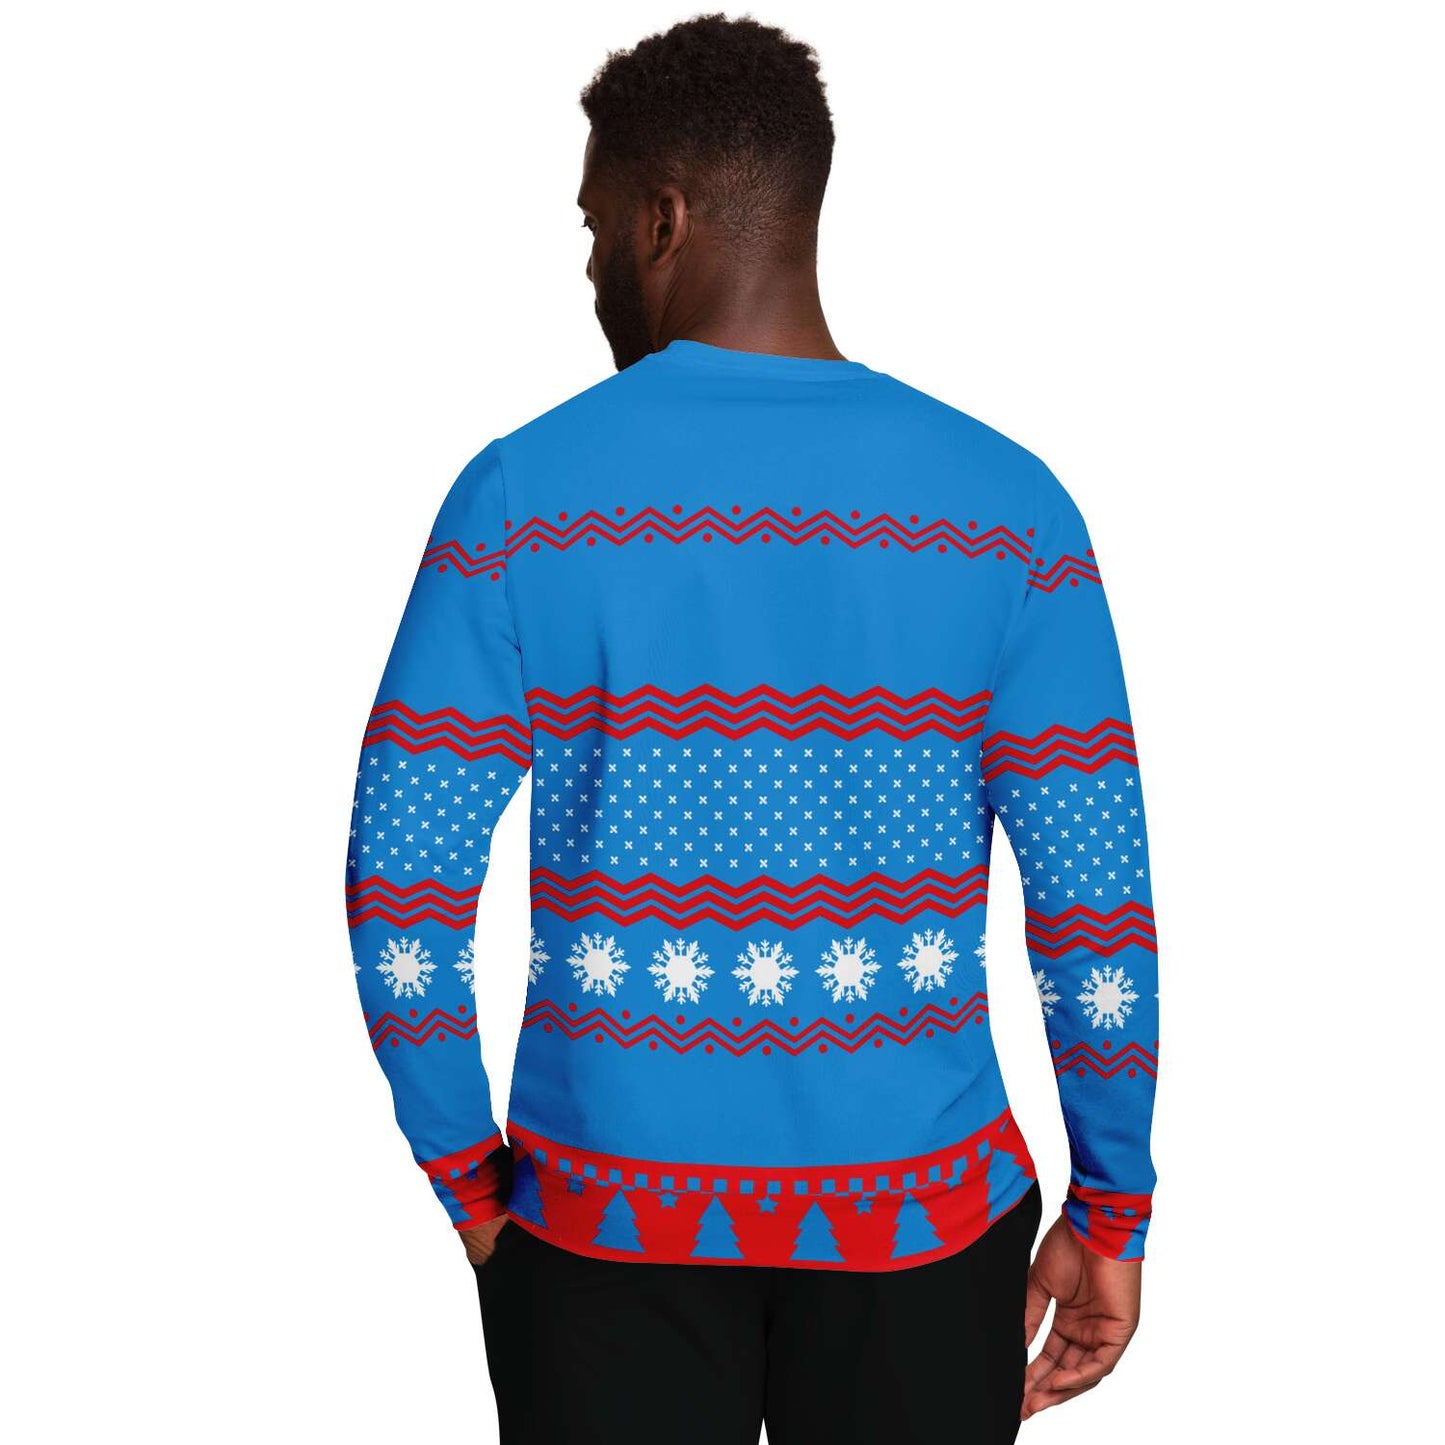 SUBLIMINATOR Meowy Christmas Ugly Christmas Sweater Sweatshirt